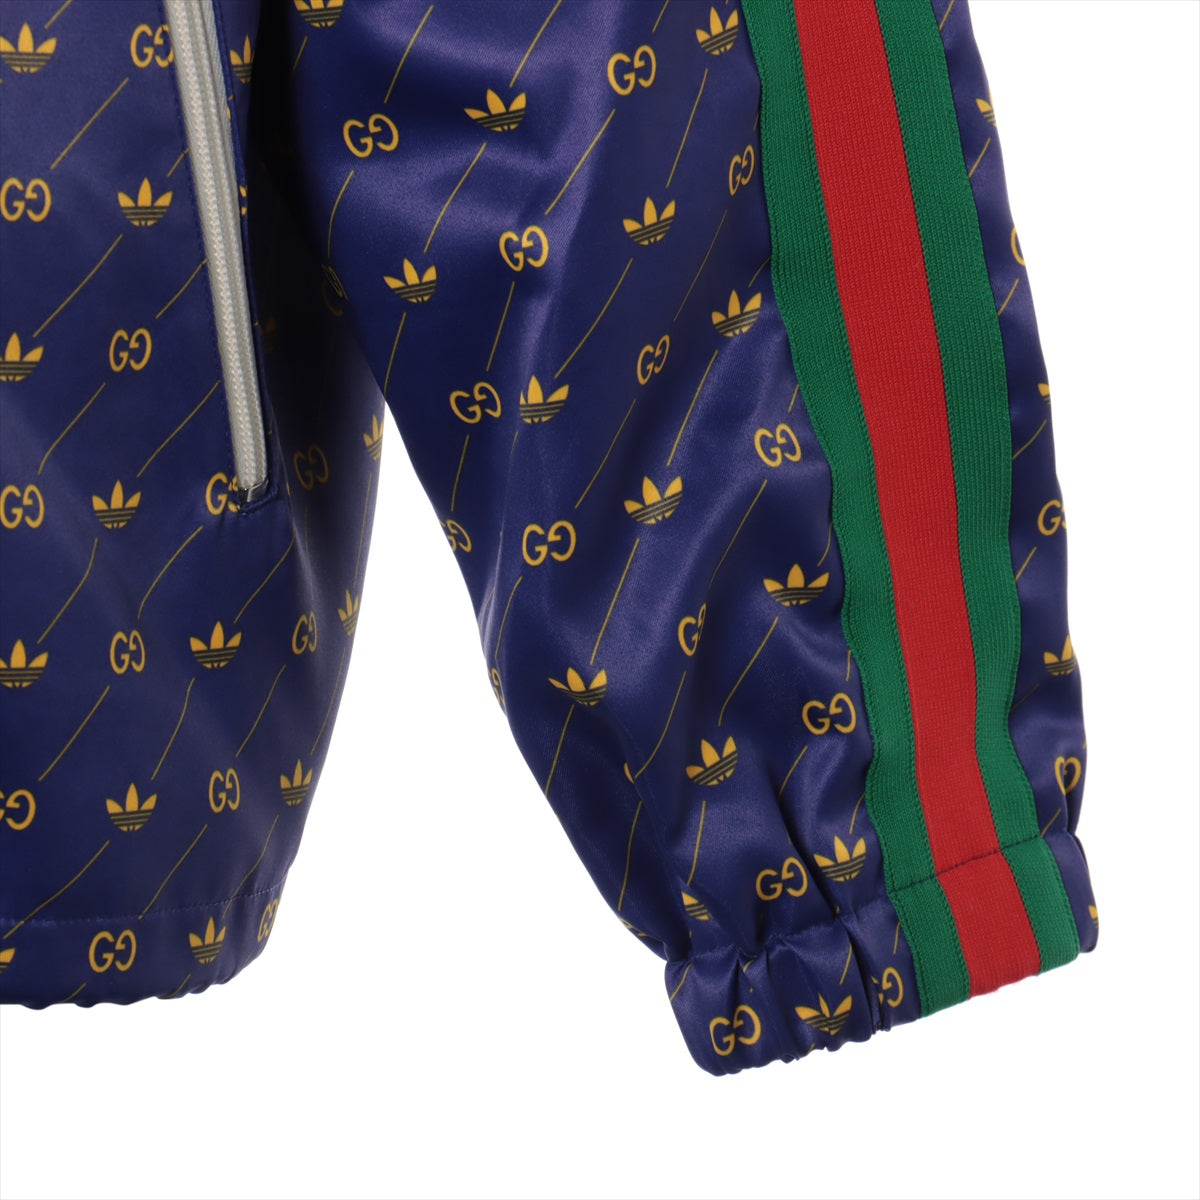 Gucci x adidas GG 22SS Polyester Jacket 48 Men's Purple  691428 Trefoil Print Jacket